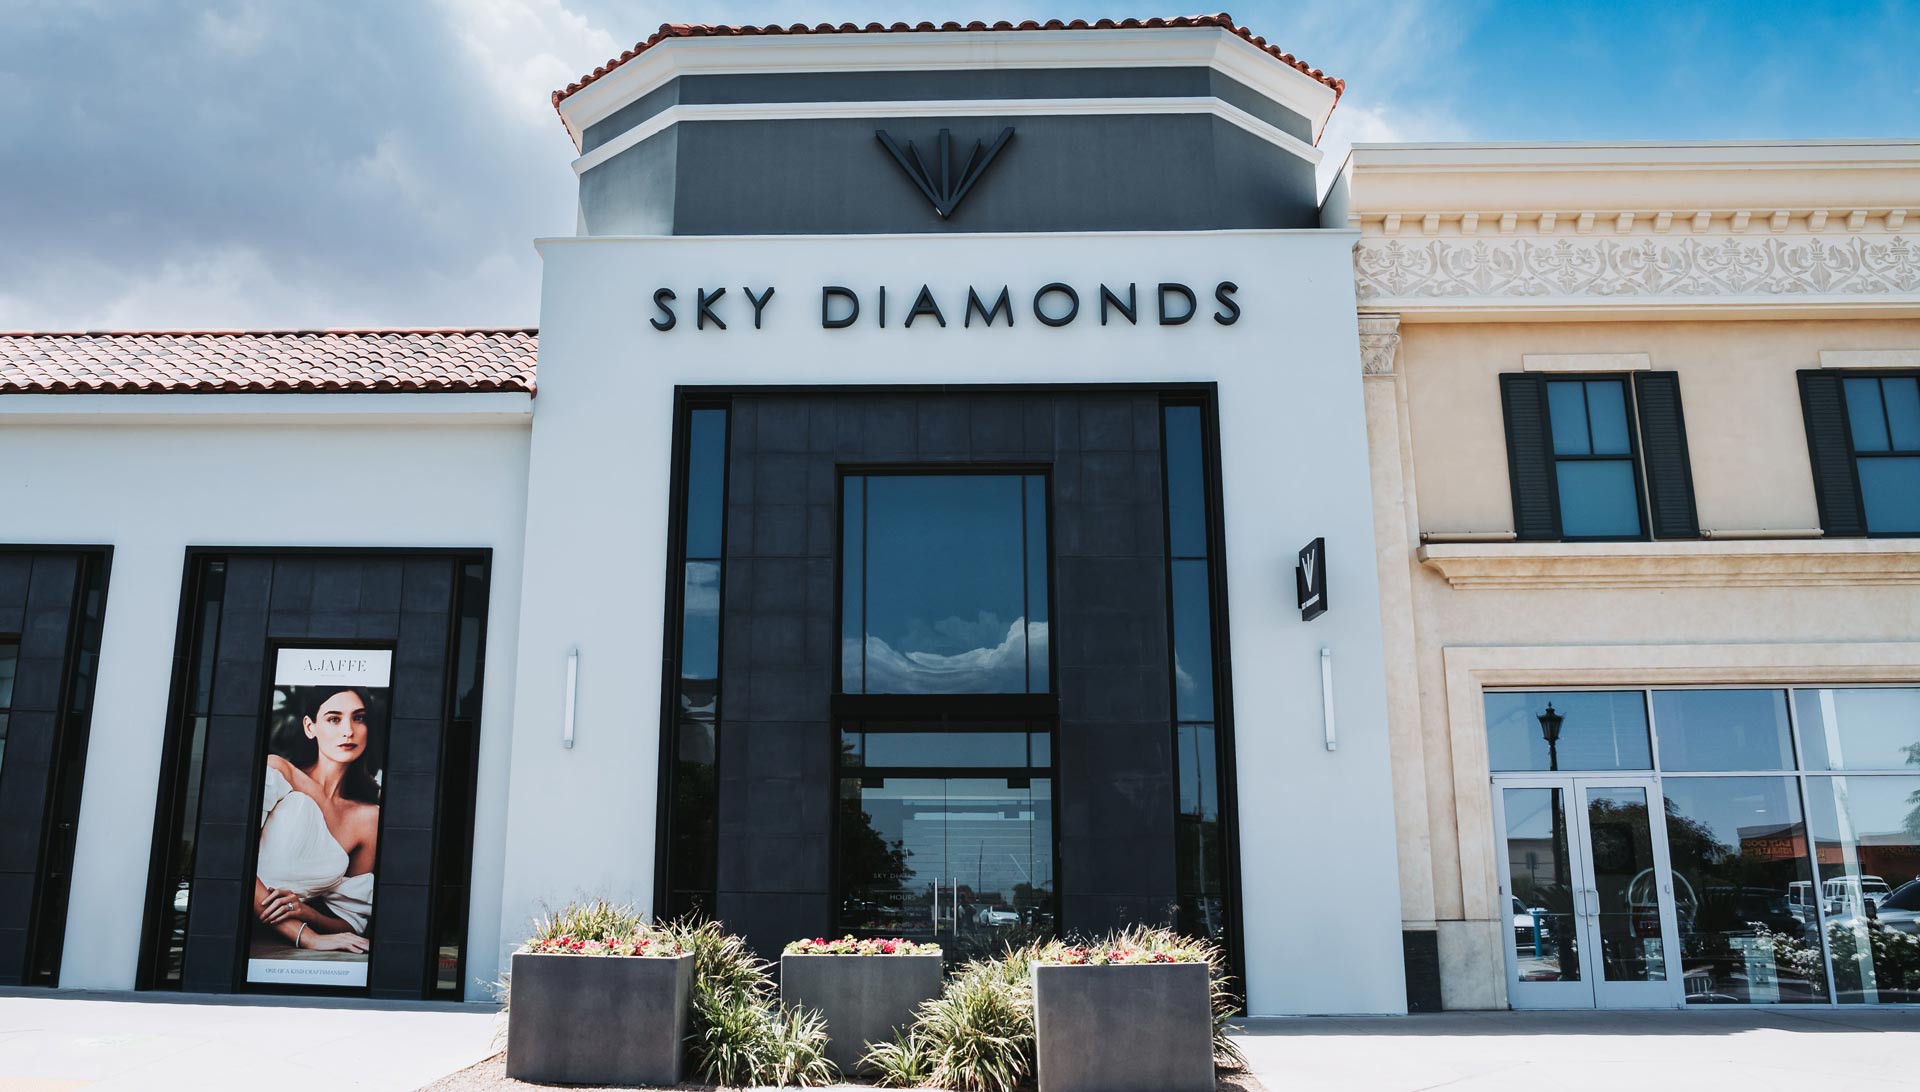 Sky Diamonds Press Release